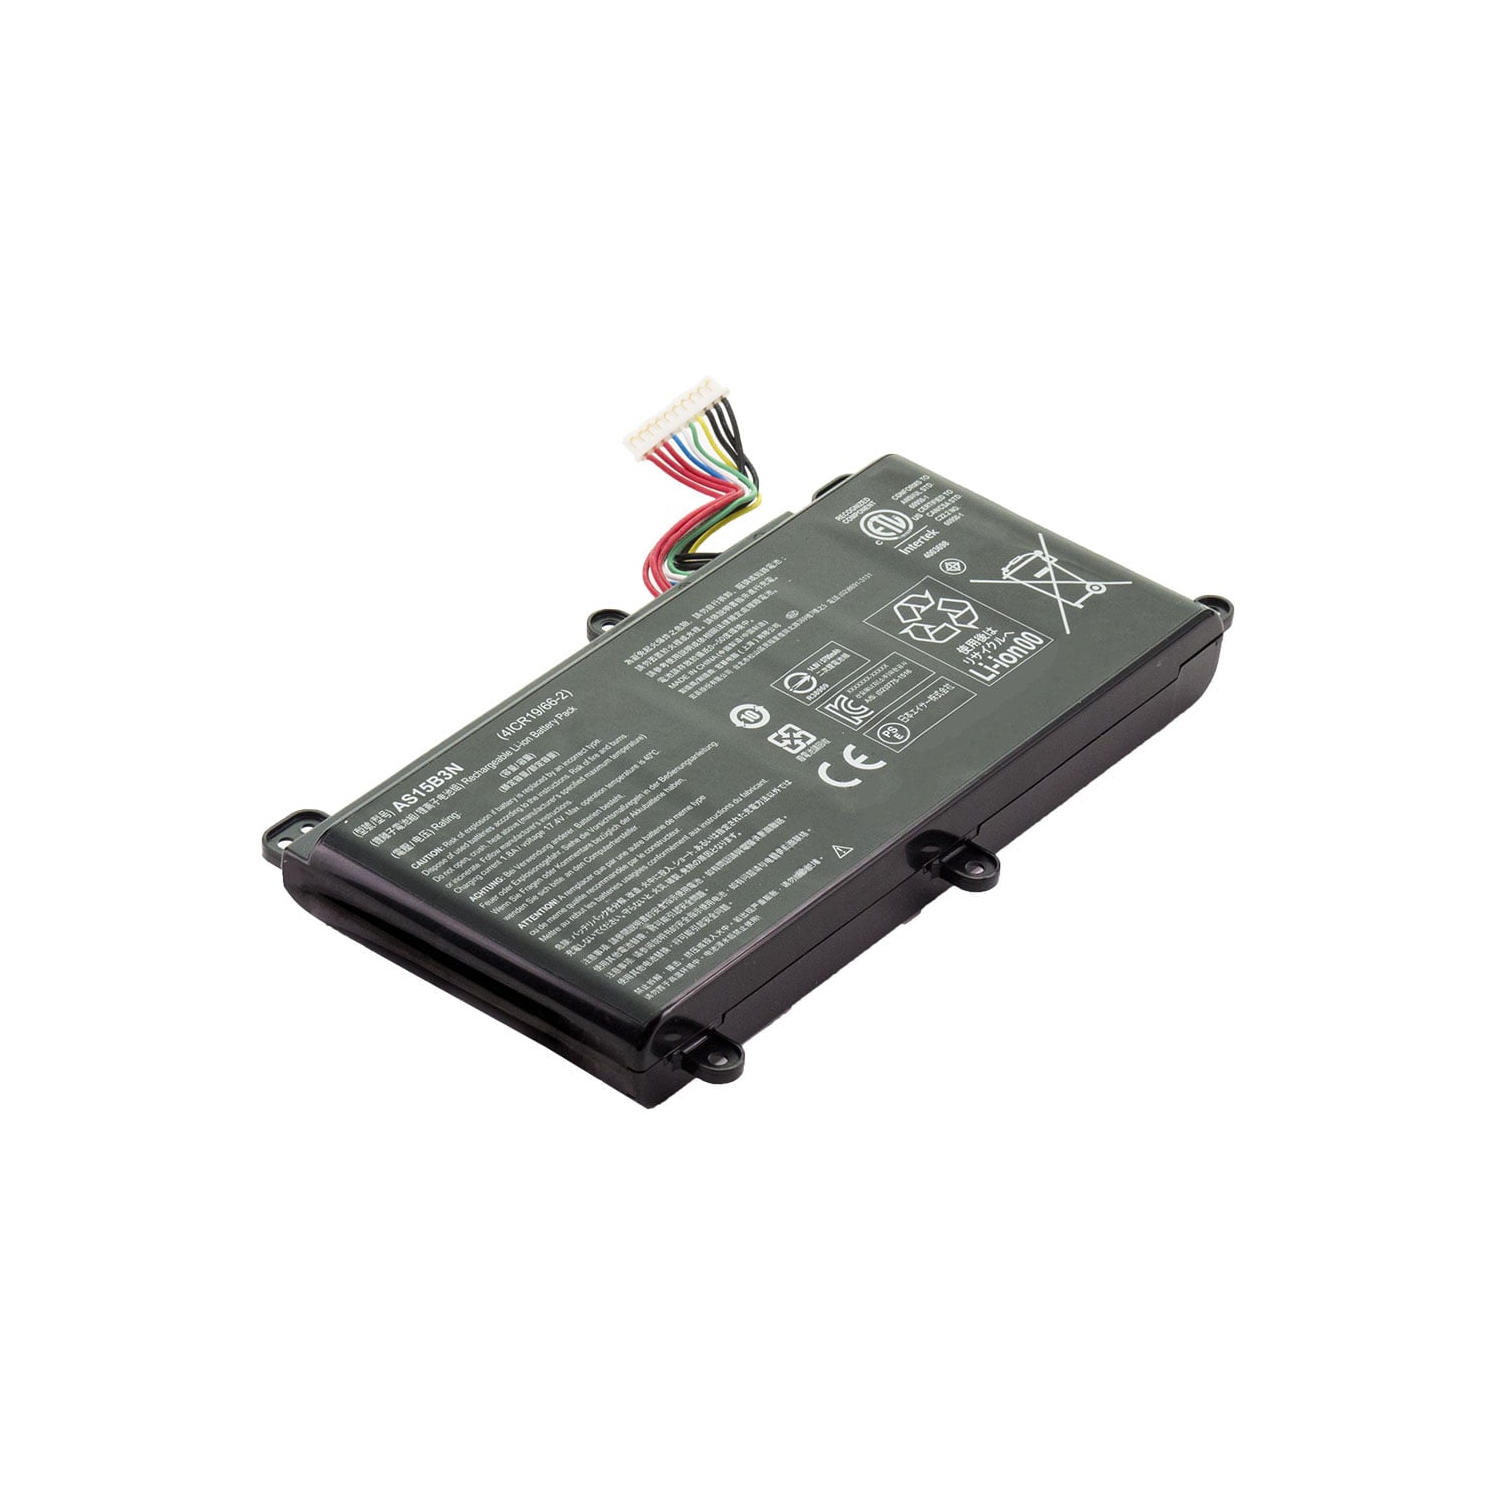 BATTDEPOT NEW Laptop Battery for Acer Predator 15 G9-593-71EH AS15B3N KT.00803.004 KT.00803.005